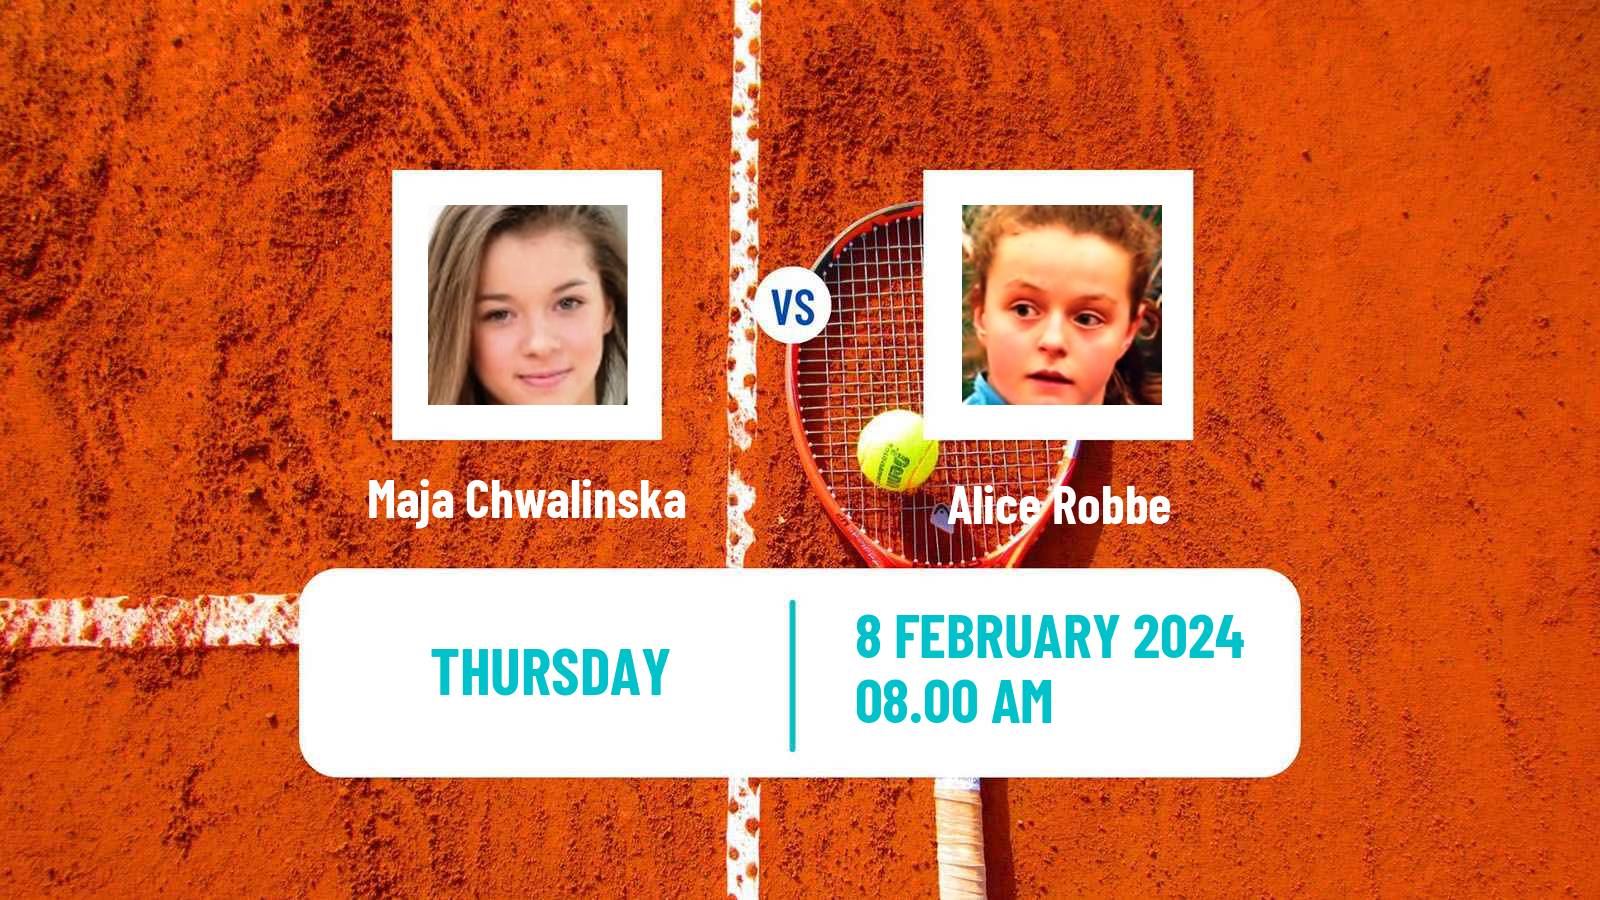 Tennis ITF W75 Grenoble Women Maja Chwalinska - Alice Robbe